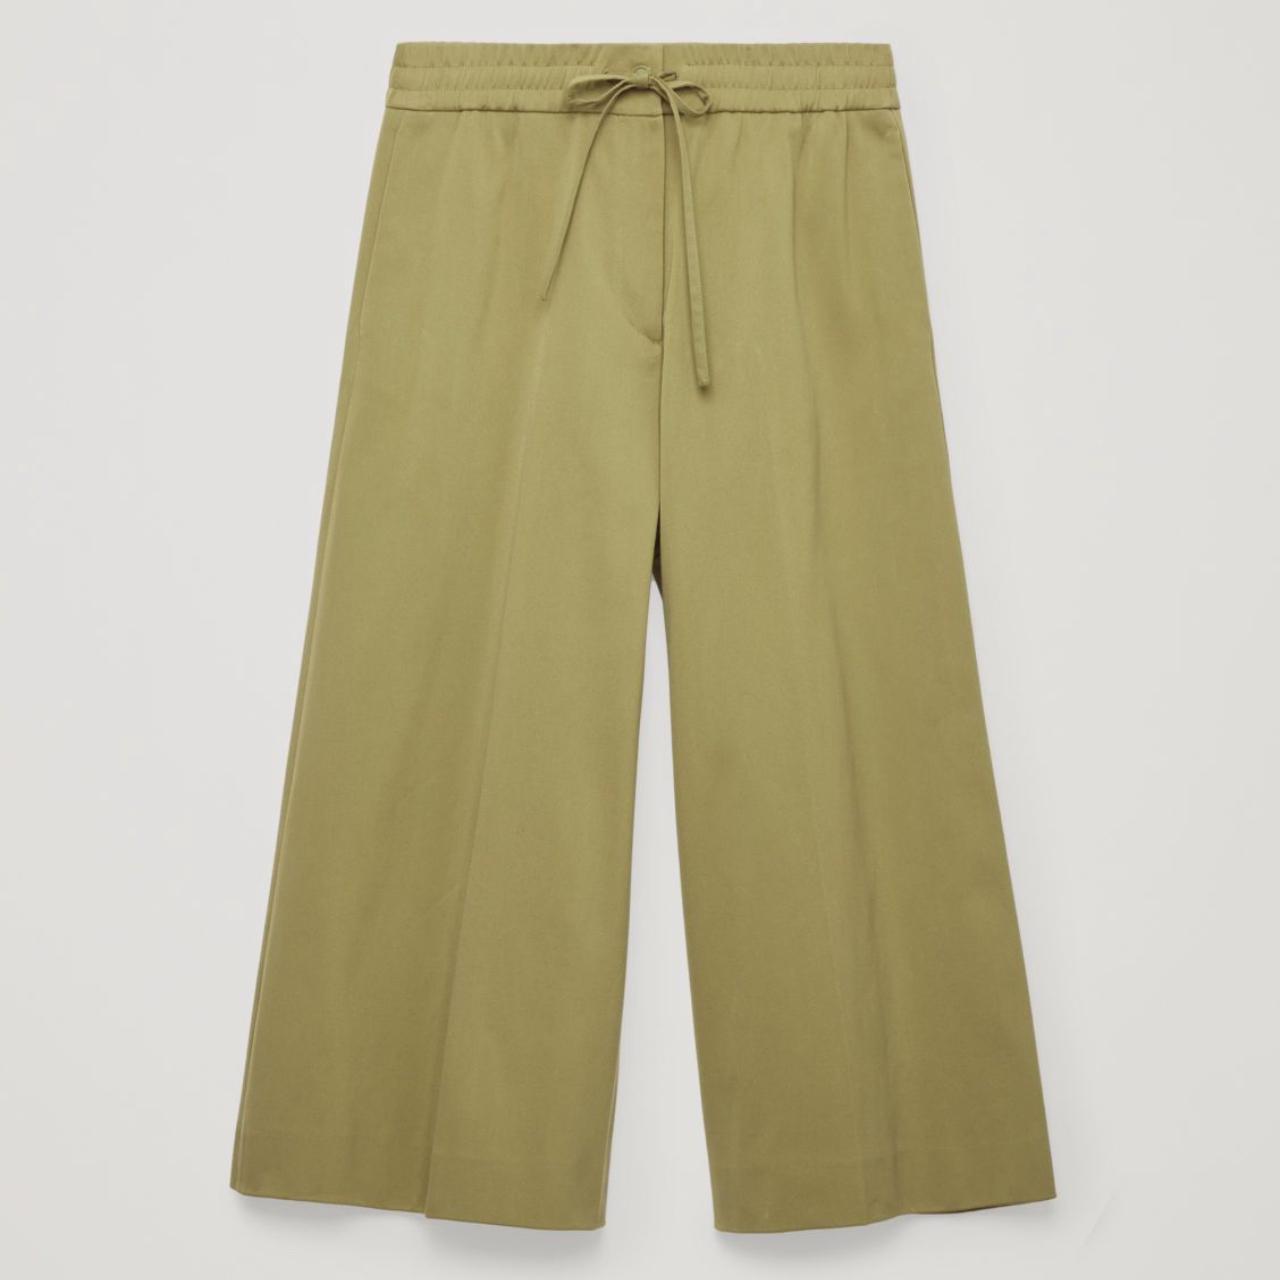 Soft Surroundings Pants Women Medium Green Chino - Depop